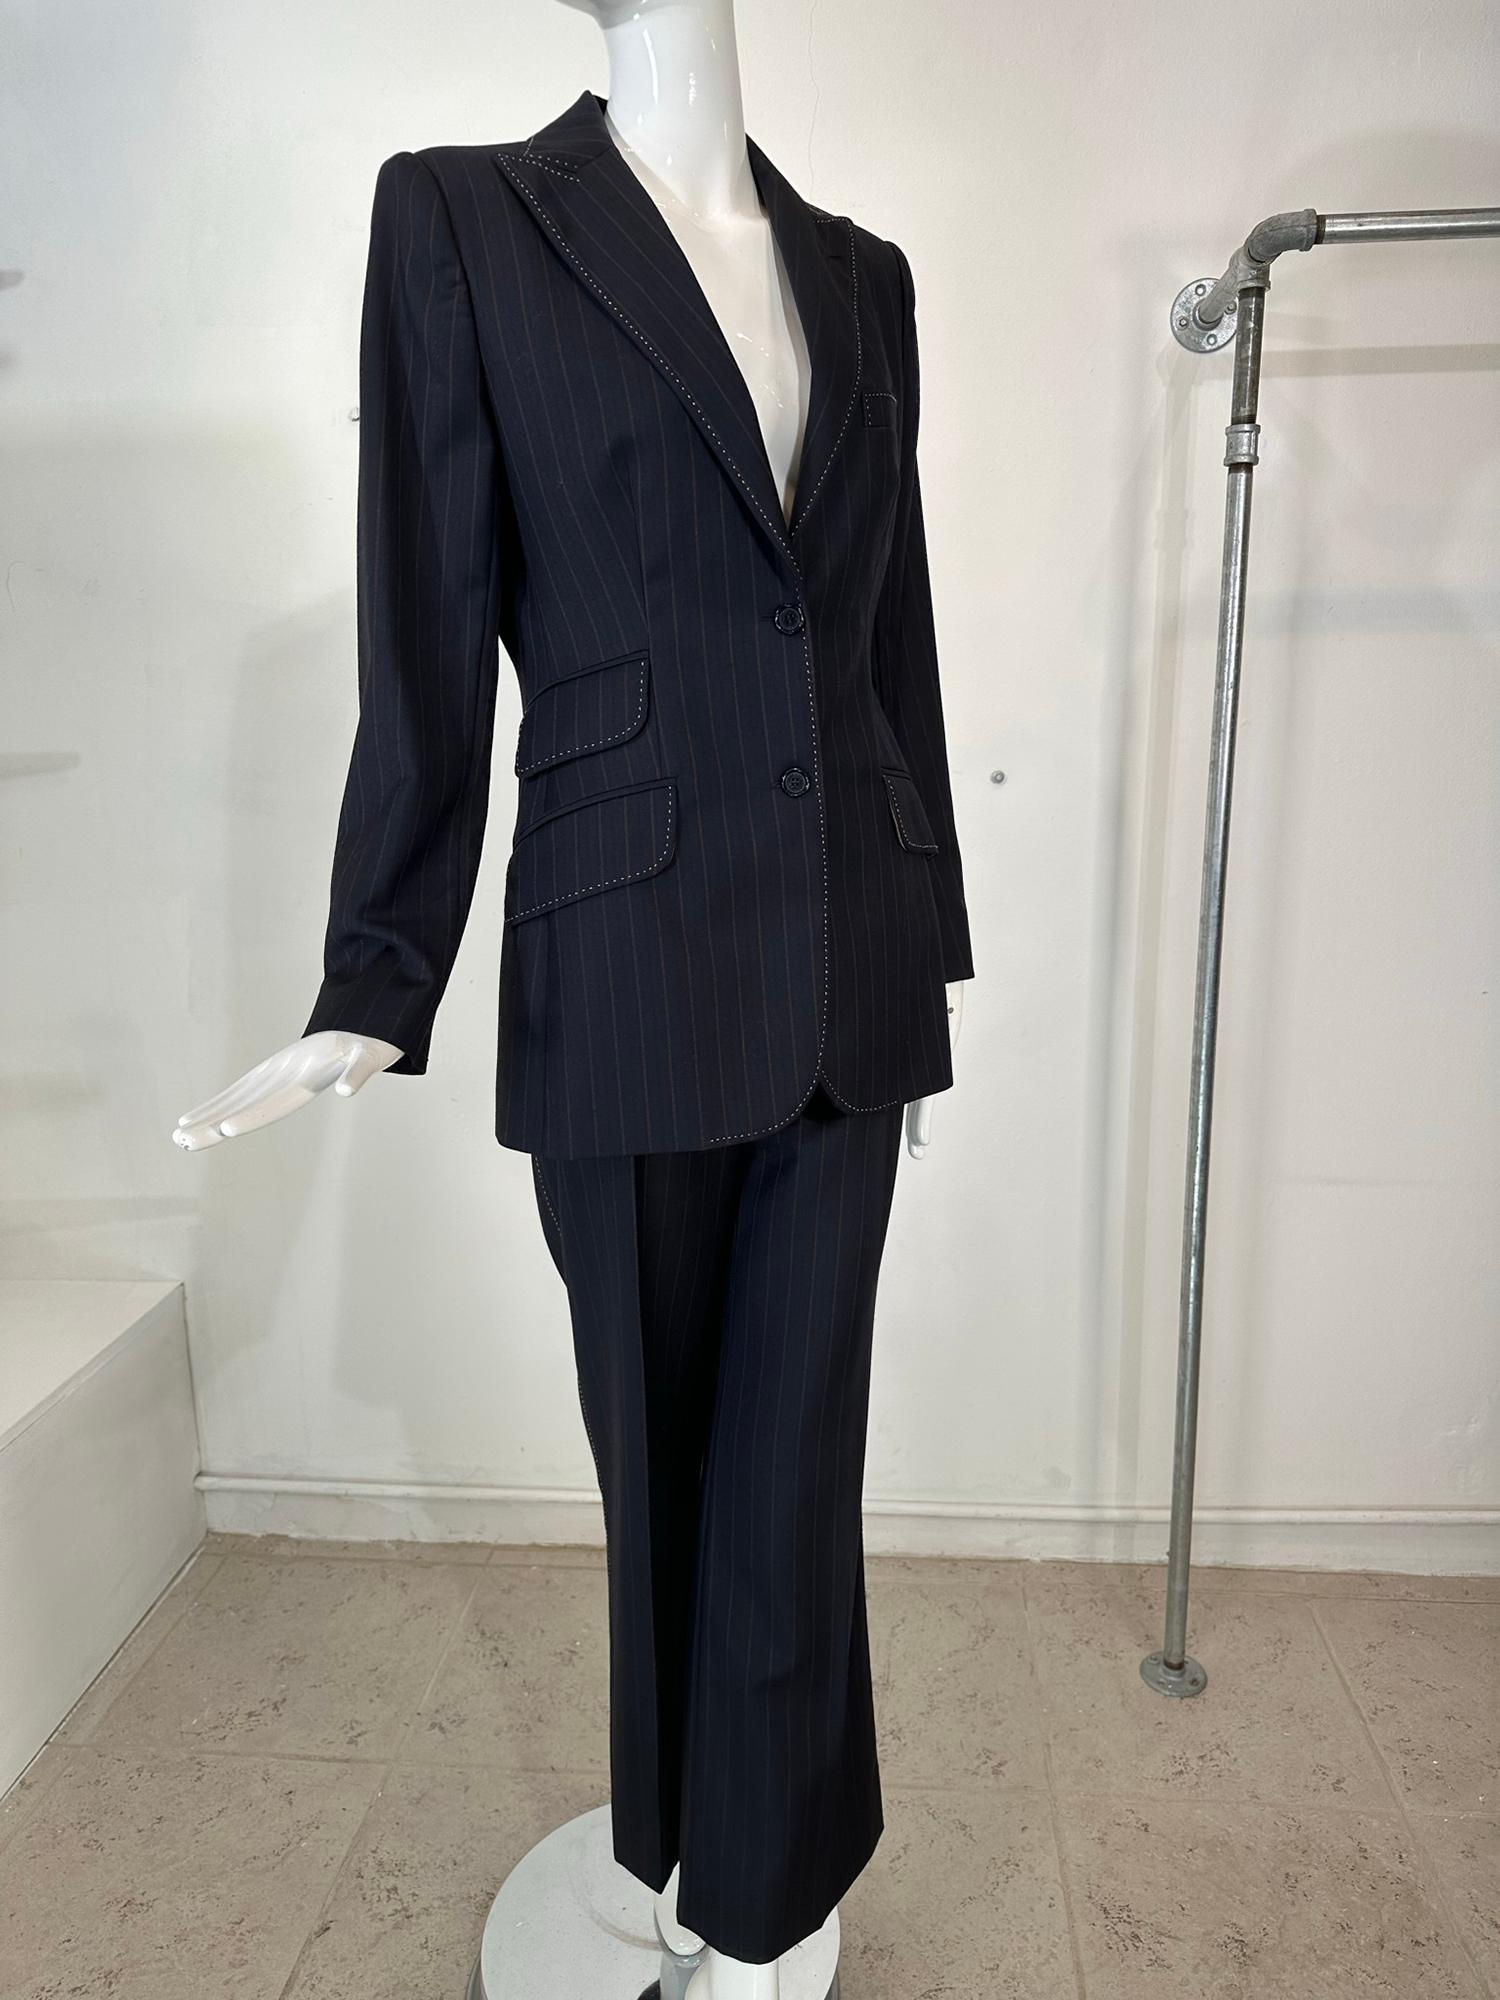 Dolce & Gabbana Pin Stripe Wool Single Breasted Jacket & Full Leg Pant Suit 44 6